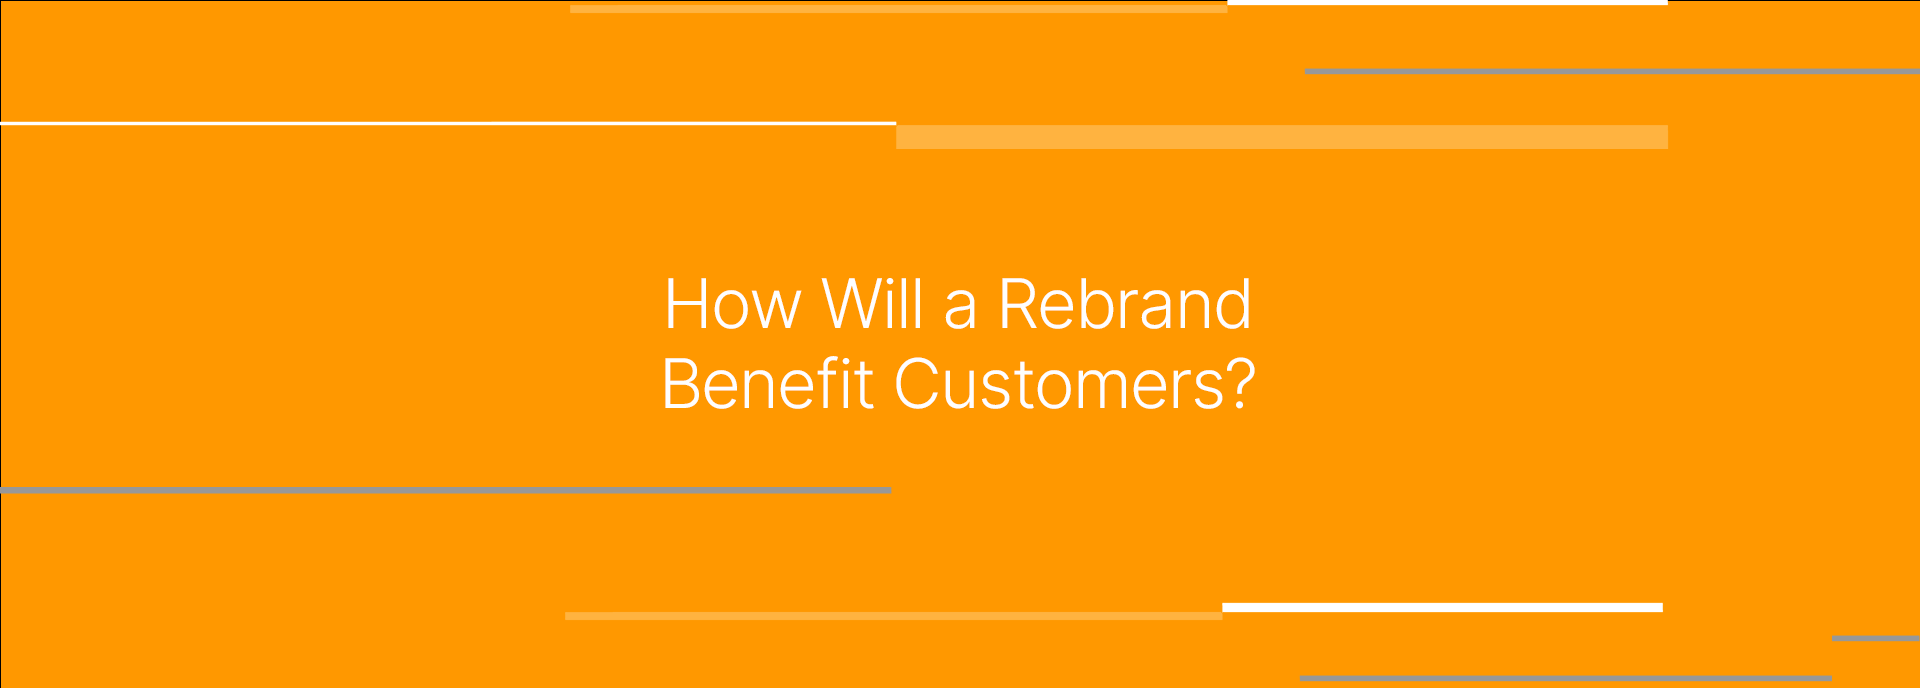 How Will a Rebrand Benefit CustomersHero v1